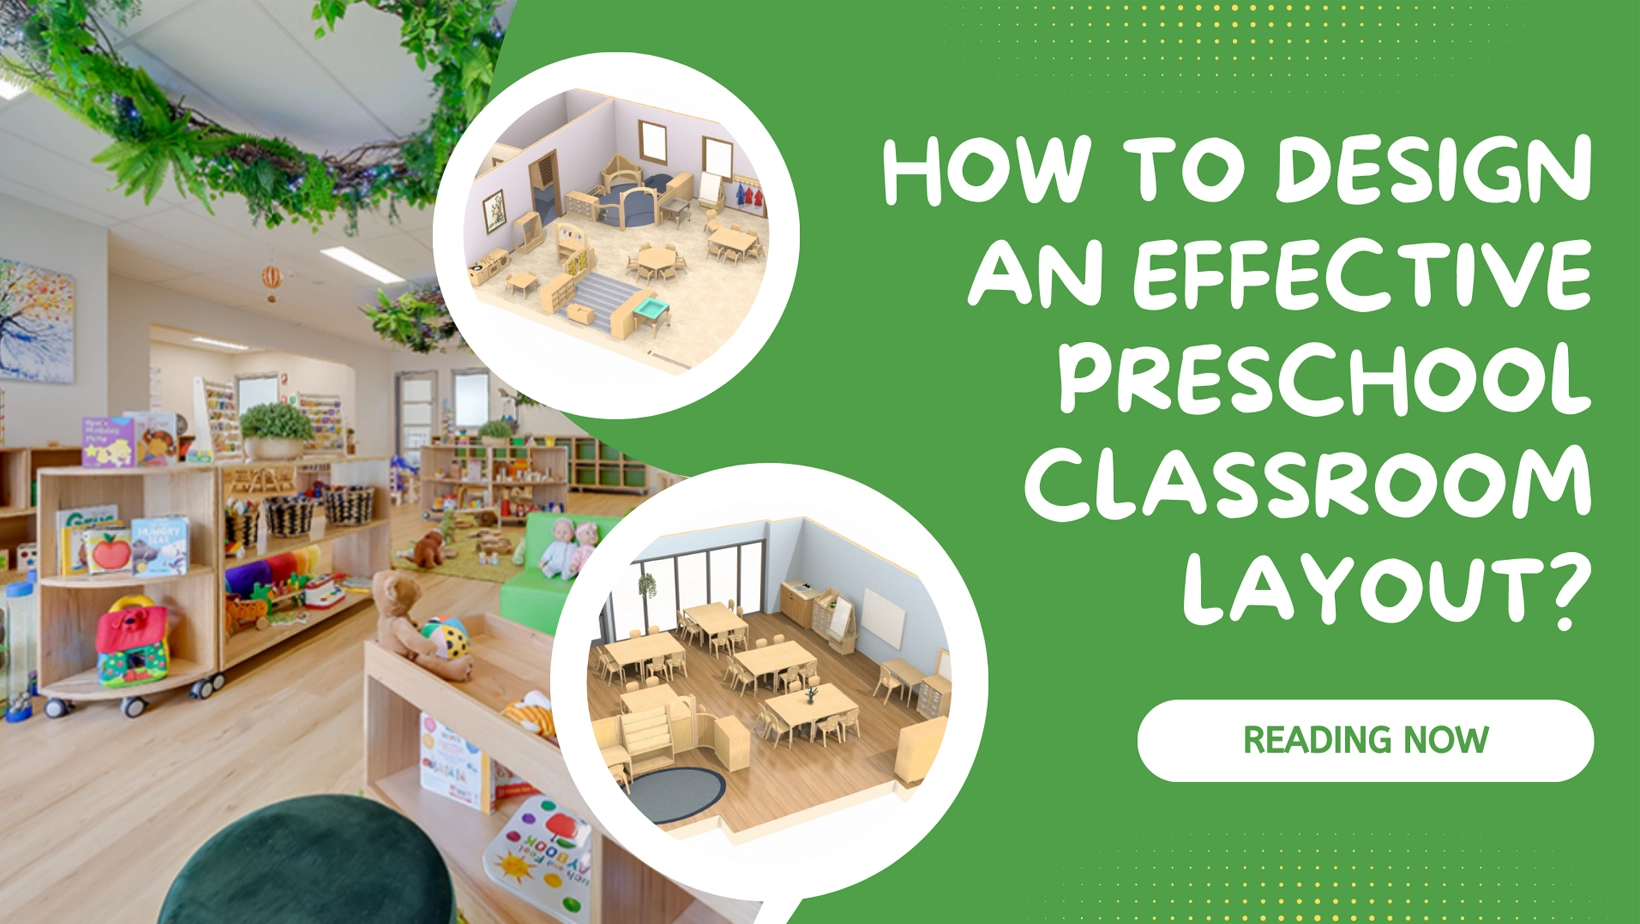 How to Design an Effective Preschool Classroom Layout